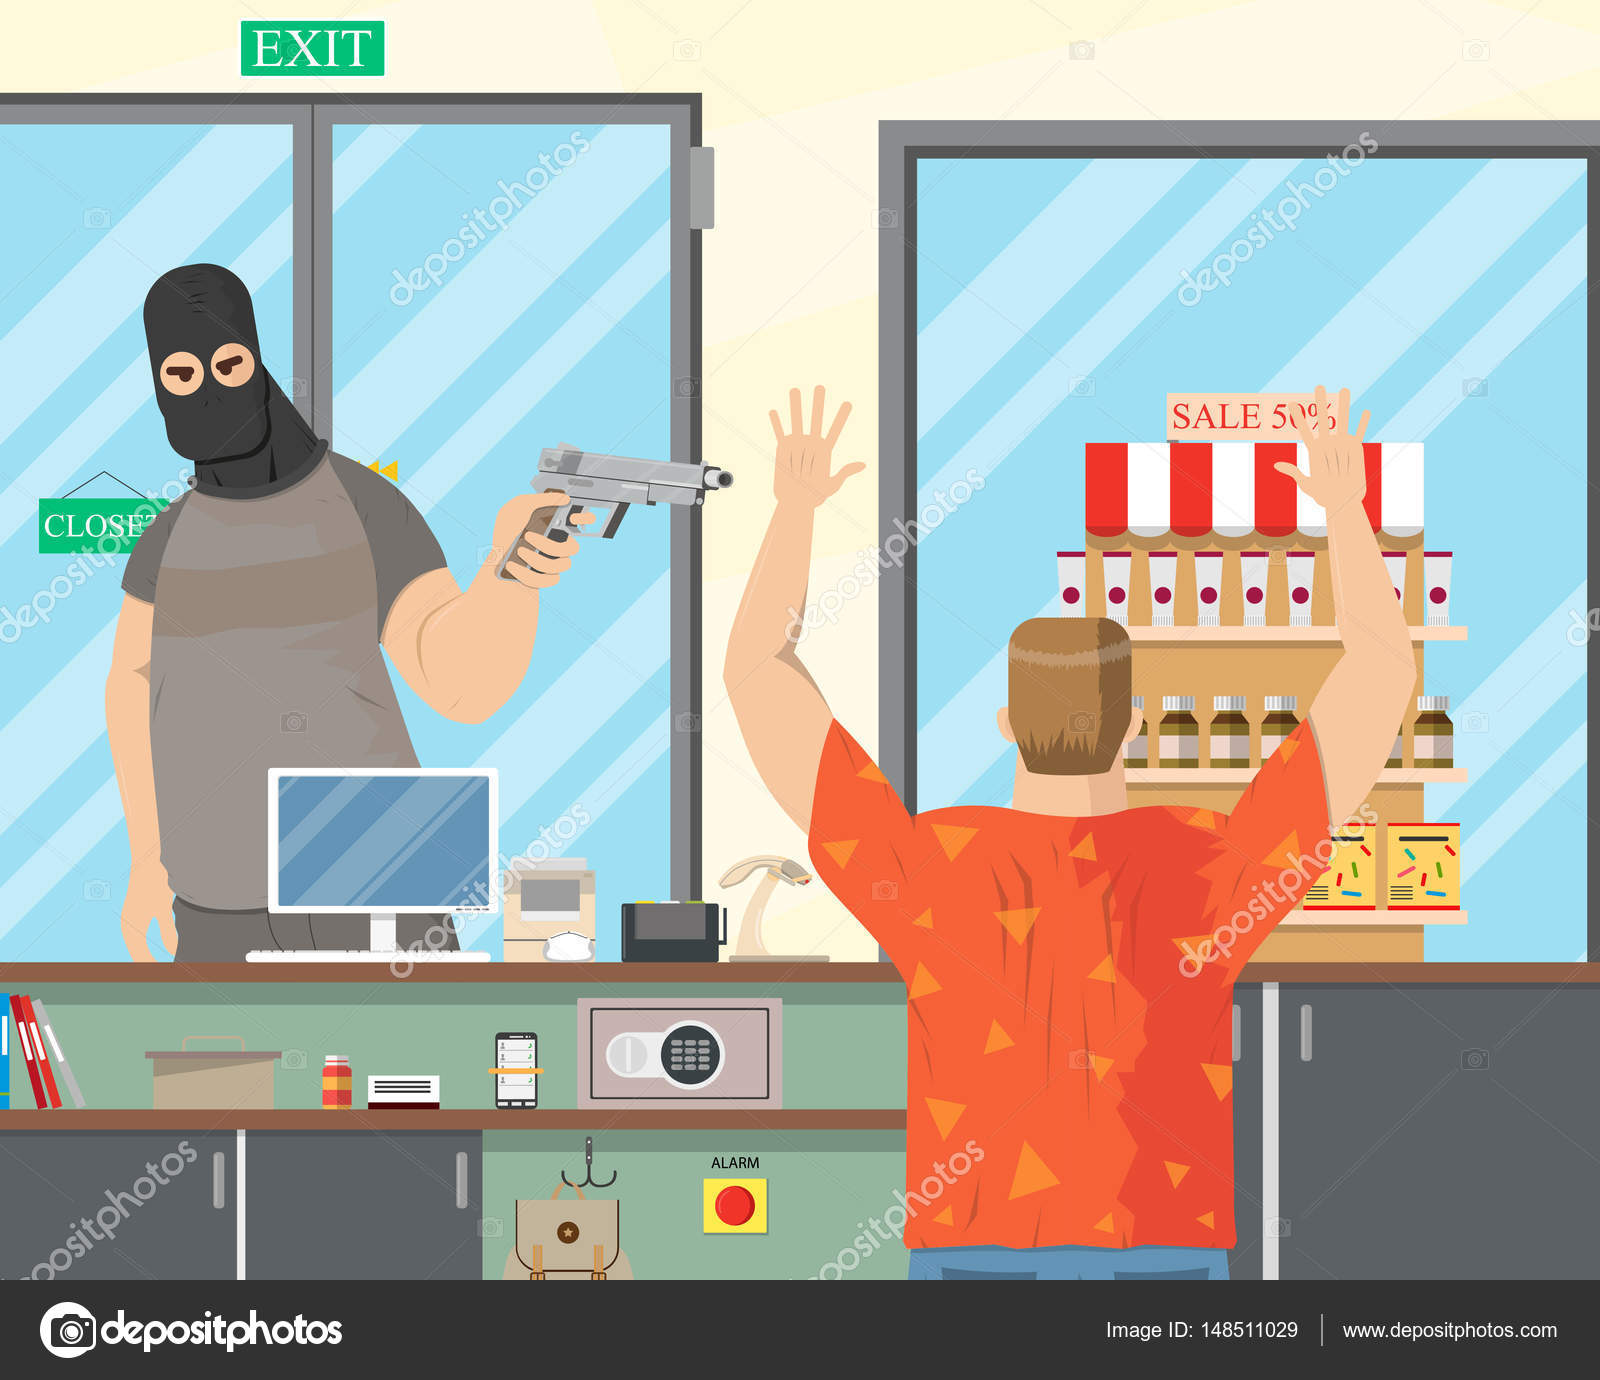 depositphotos_148511029-stock-illustration-the-store-robbery.jpg